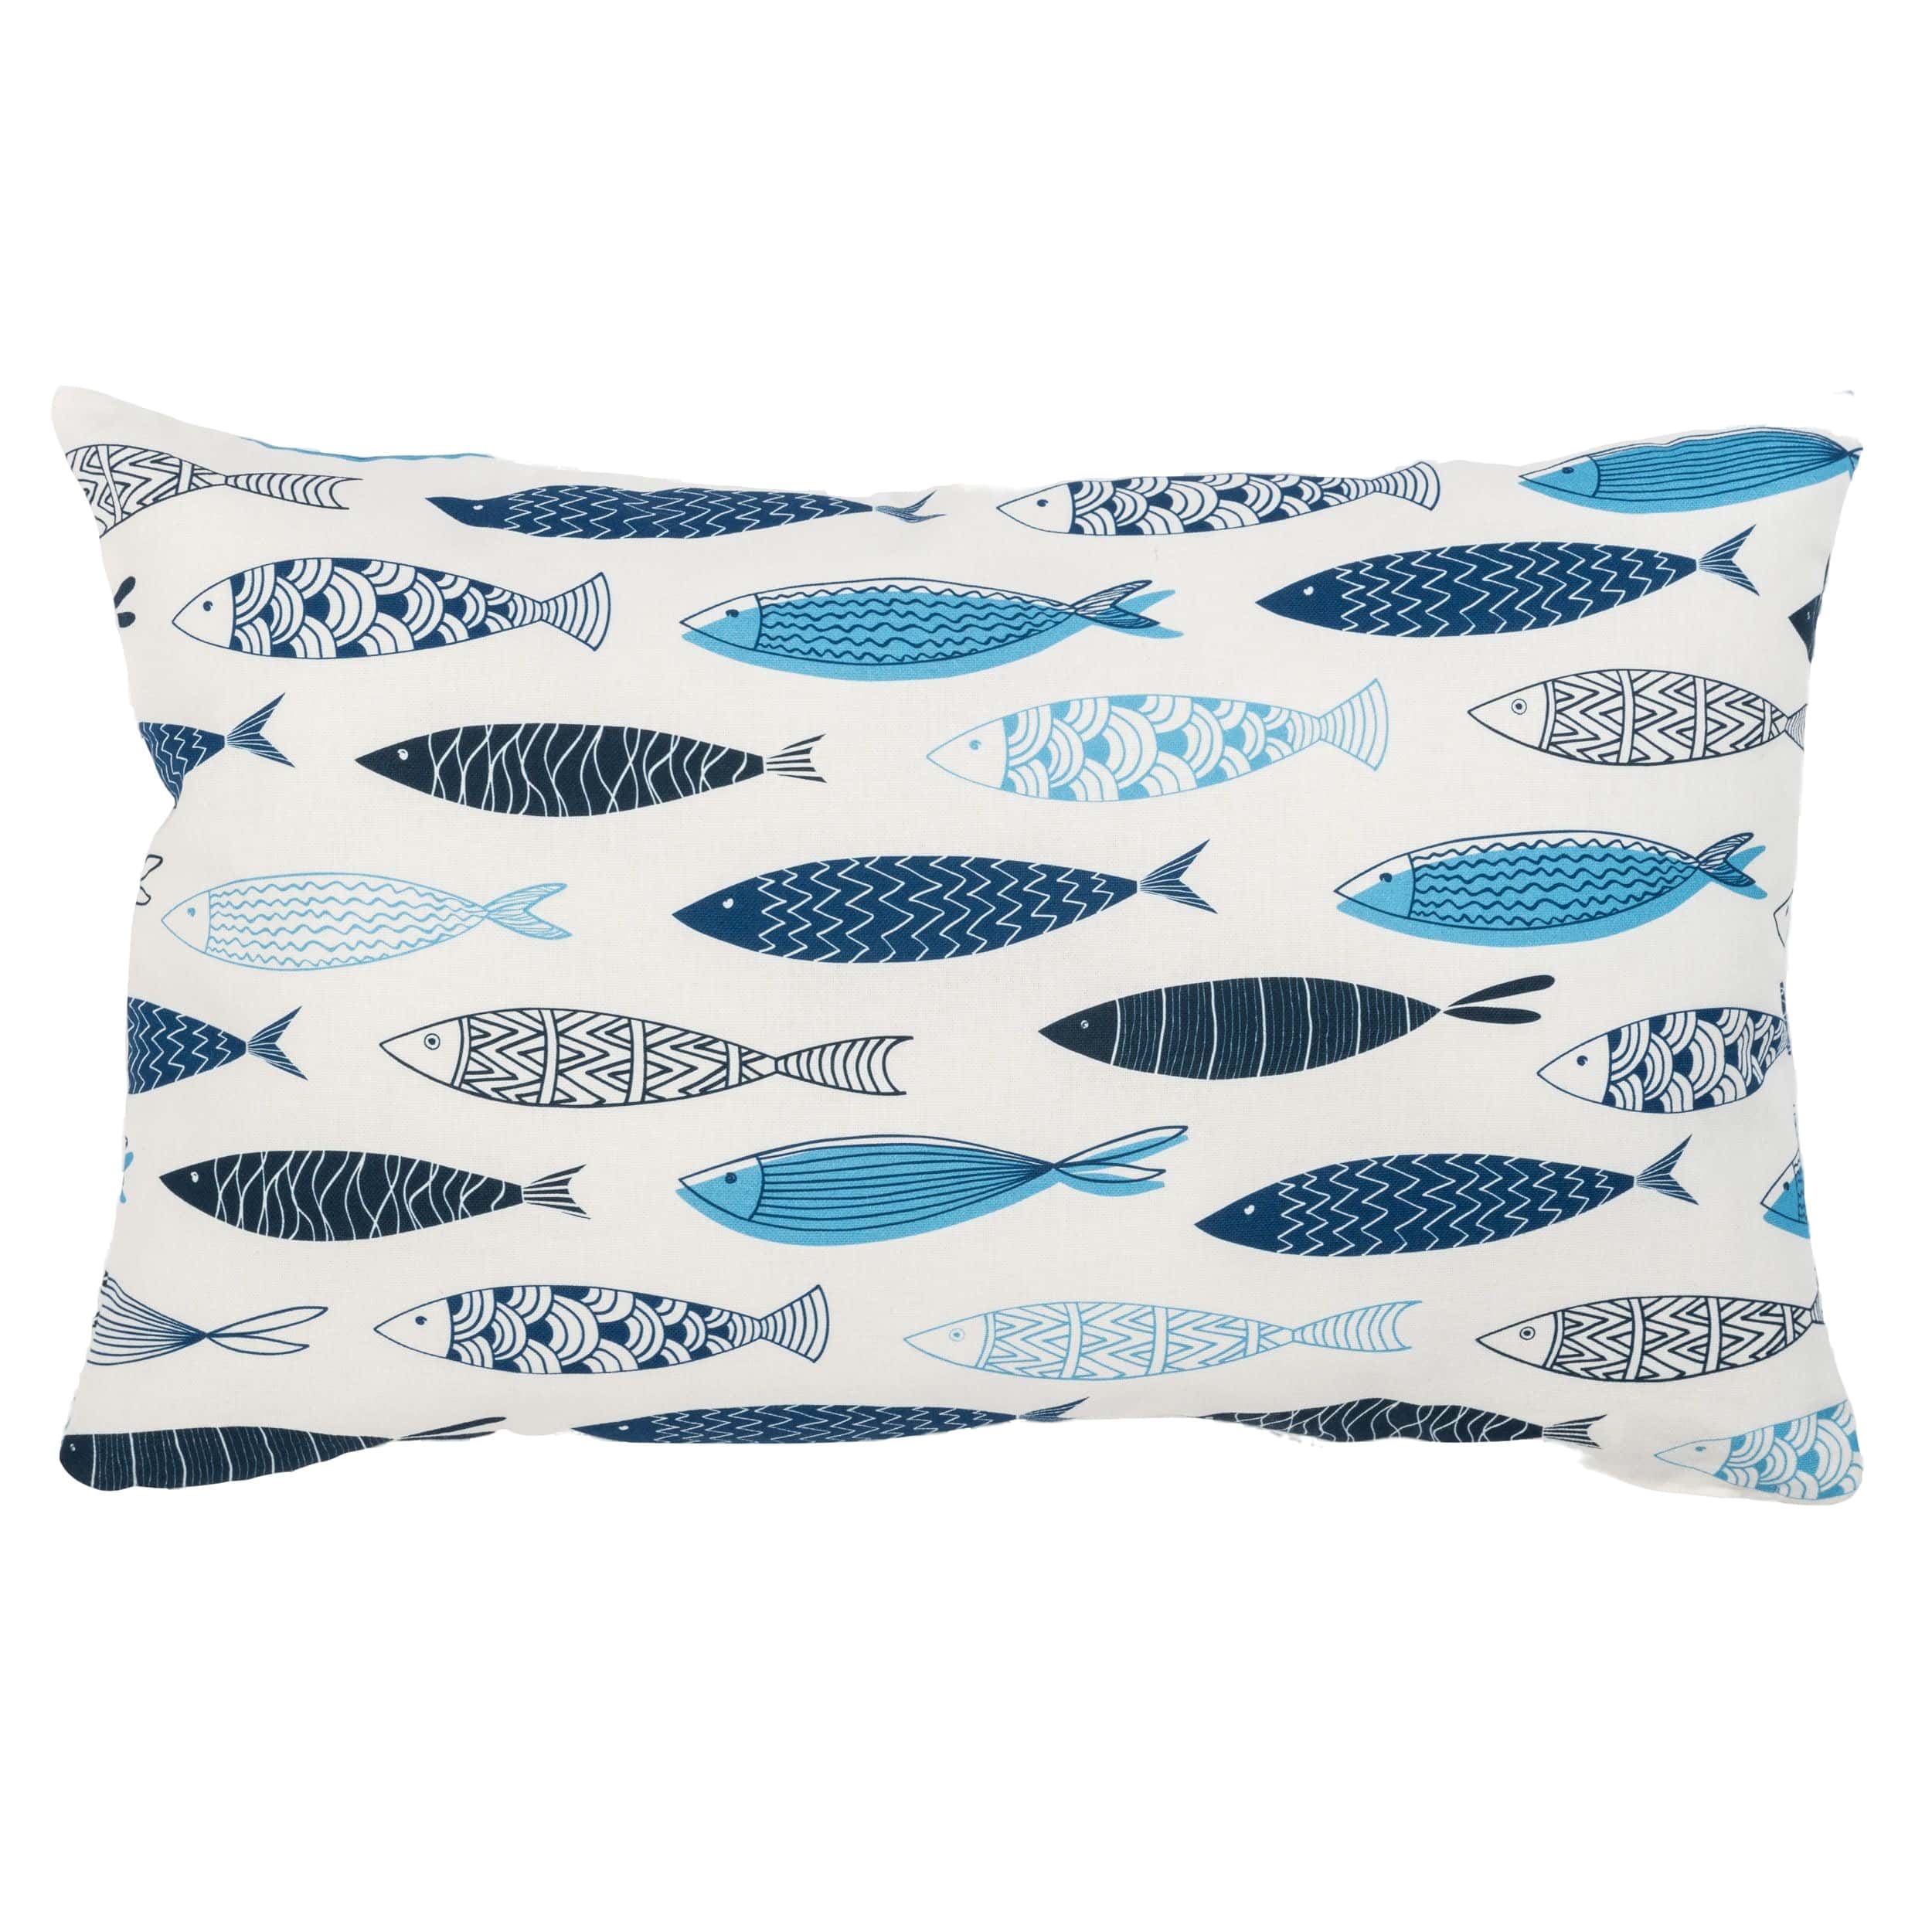 Atlantic Fish Print XL Rectangular Cushion in Blue and White